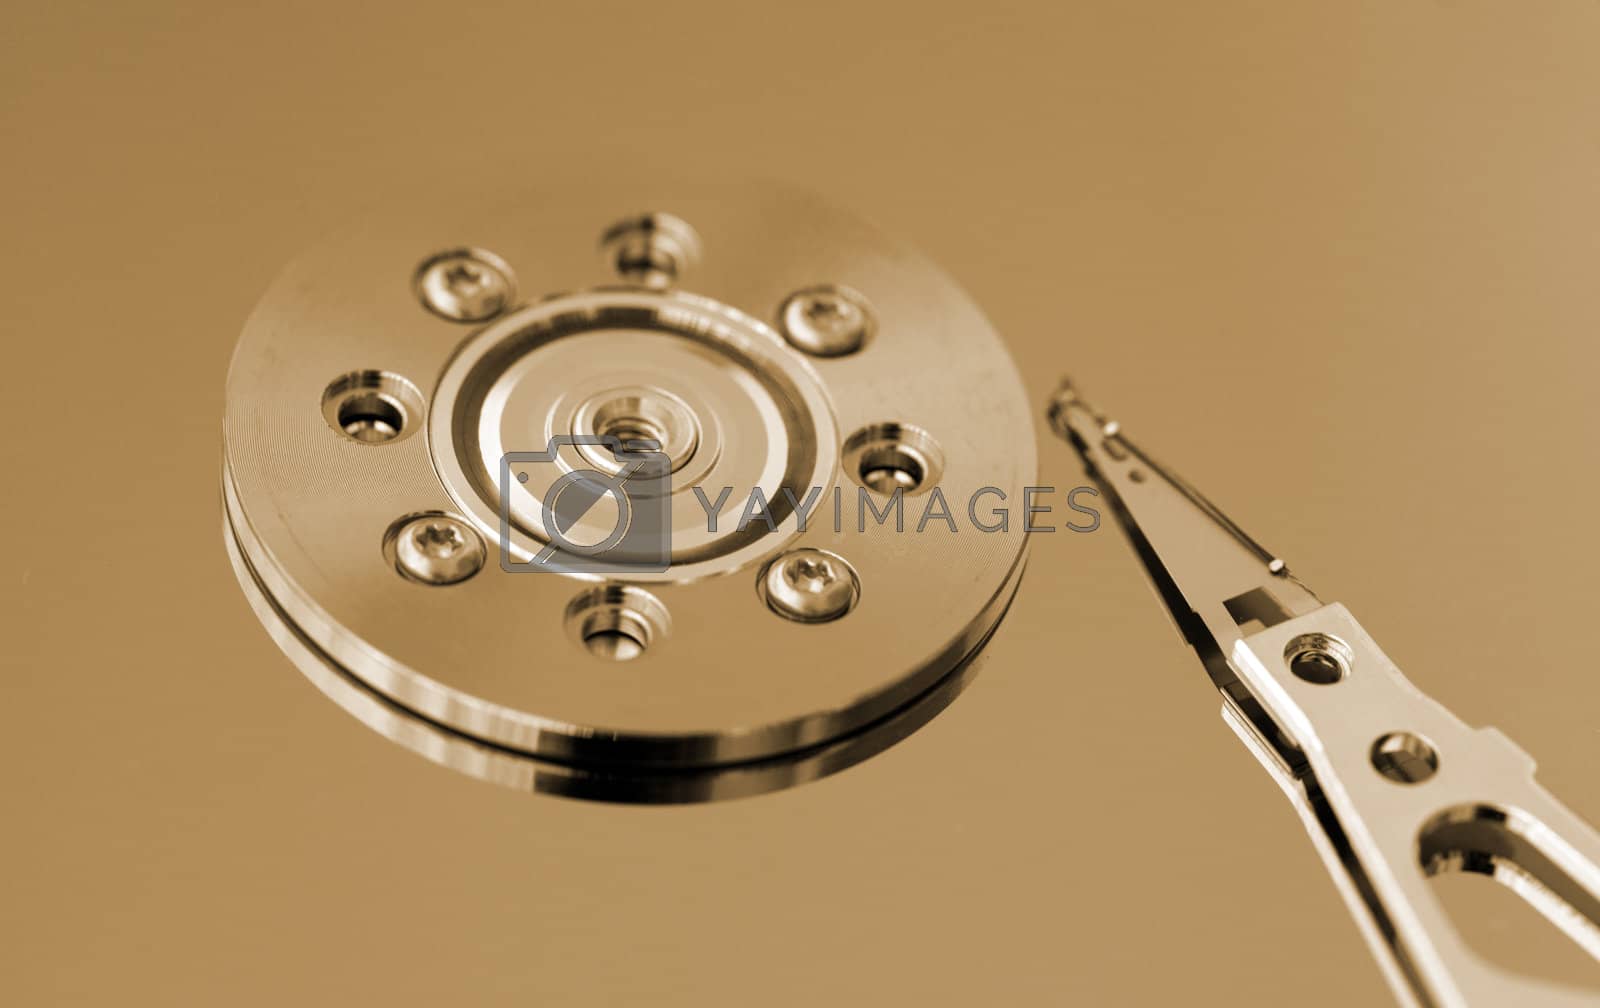 Royalty free image of macro shot of hard disk by motorolka